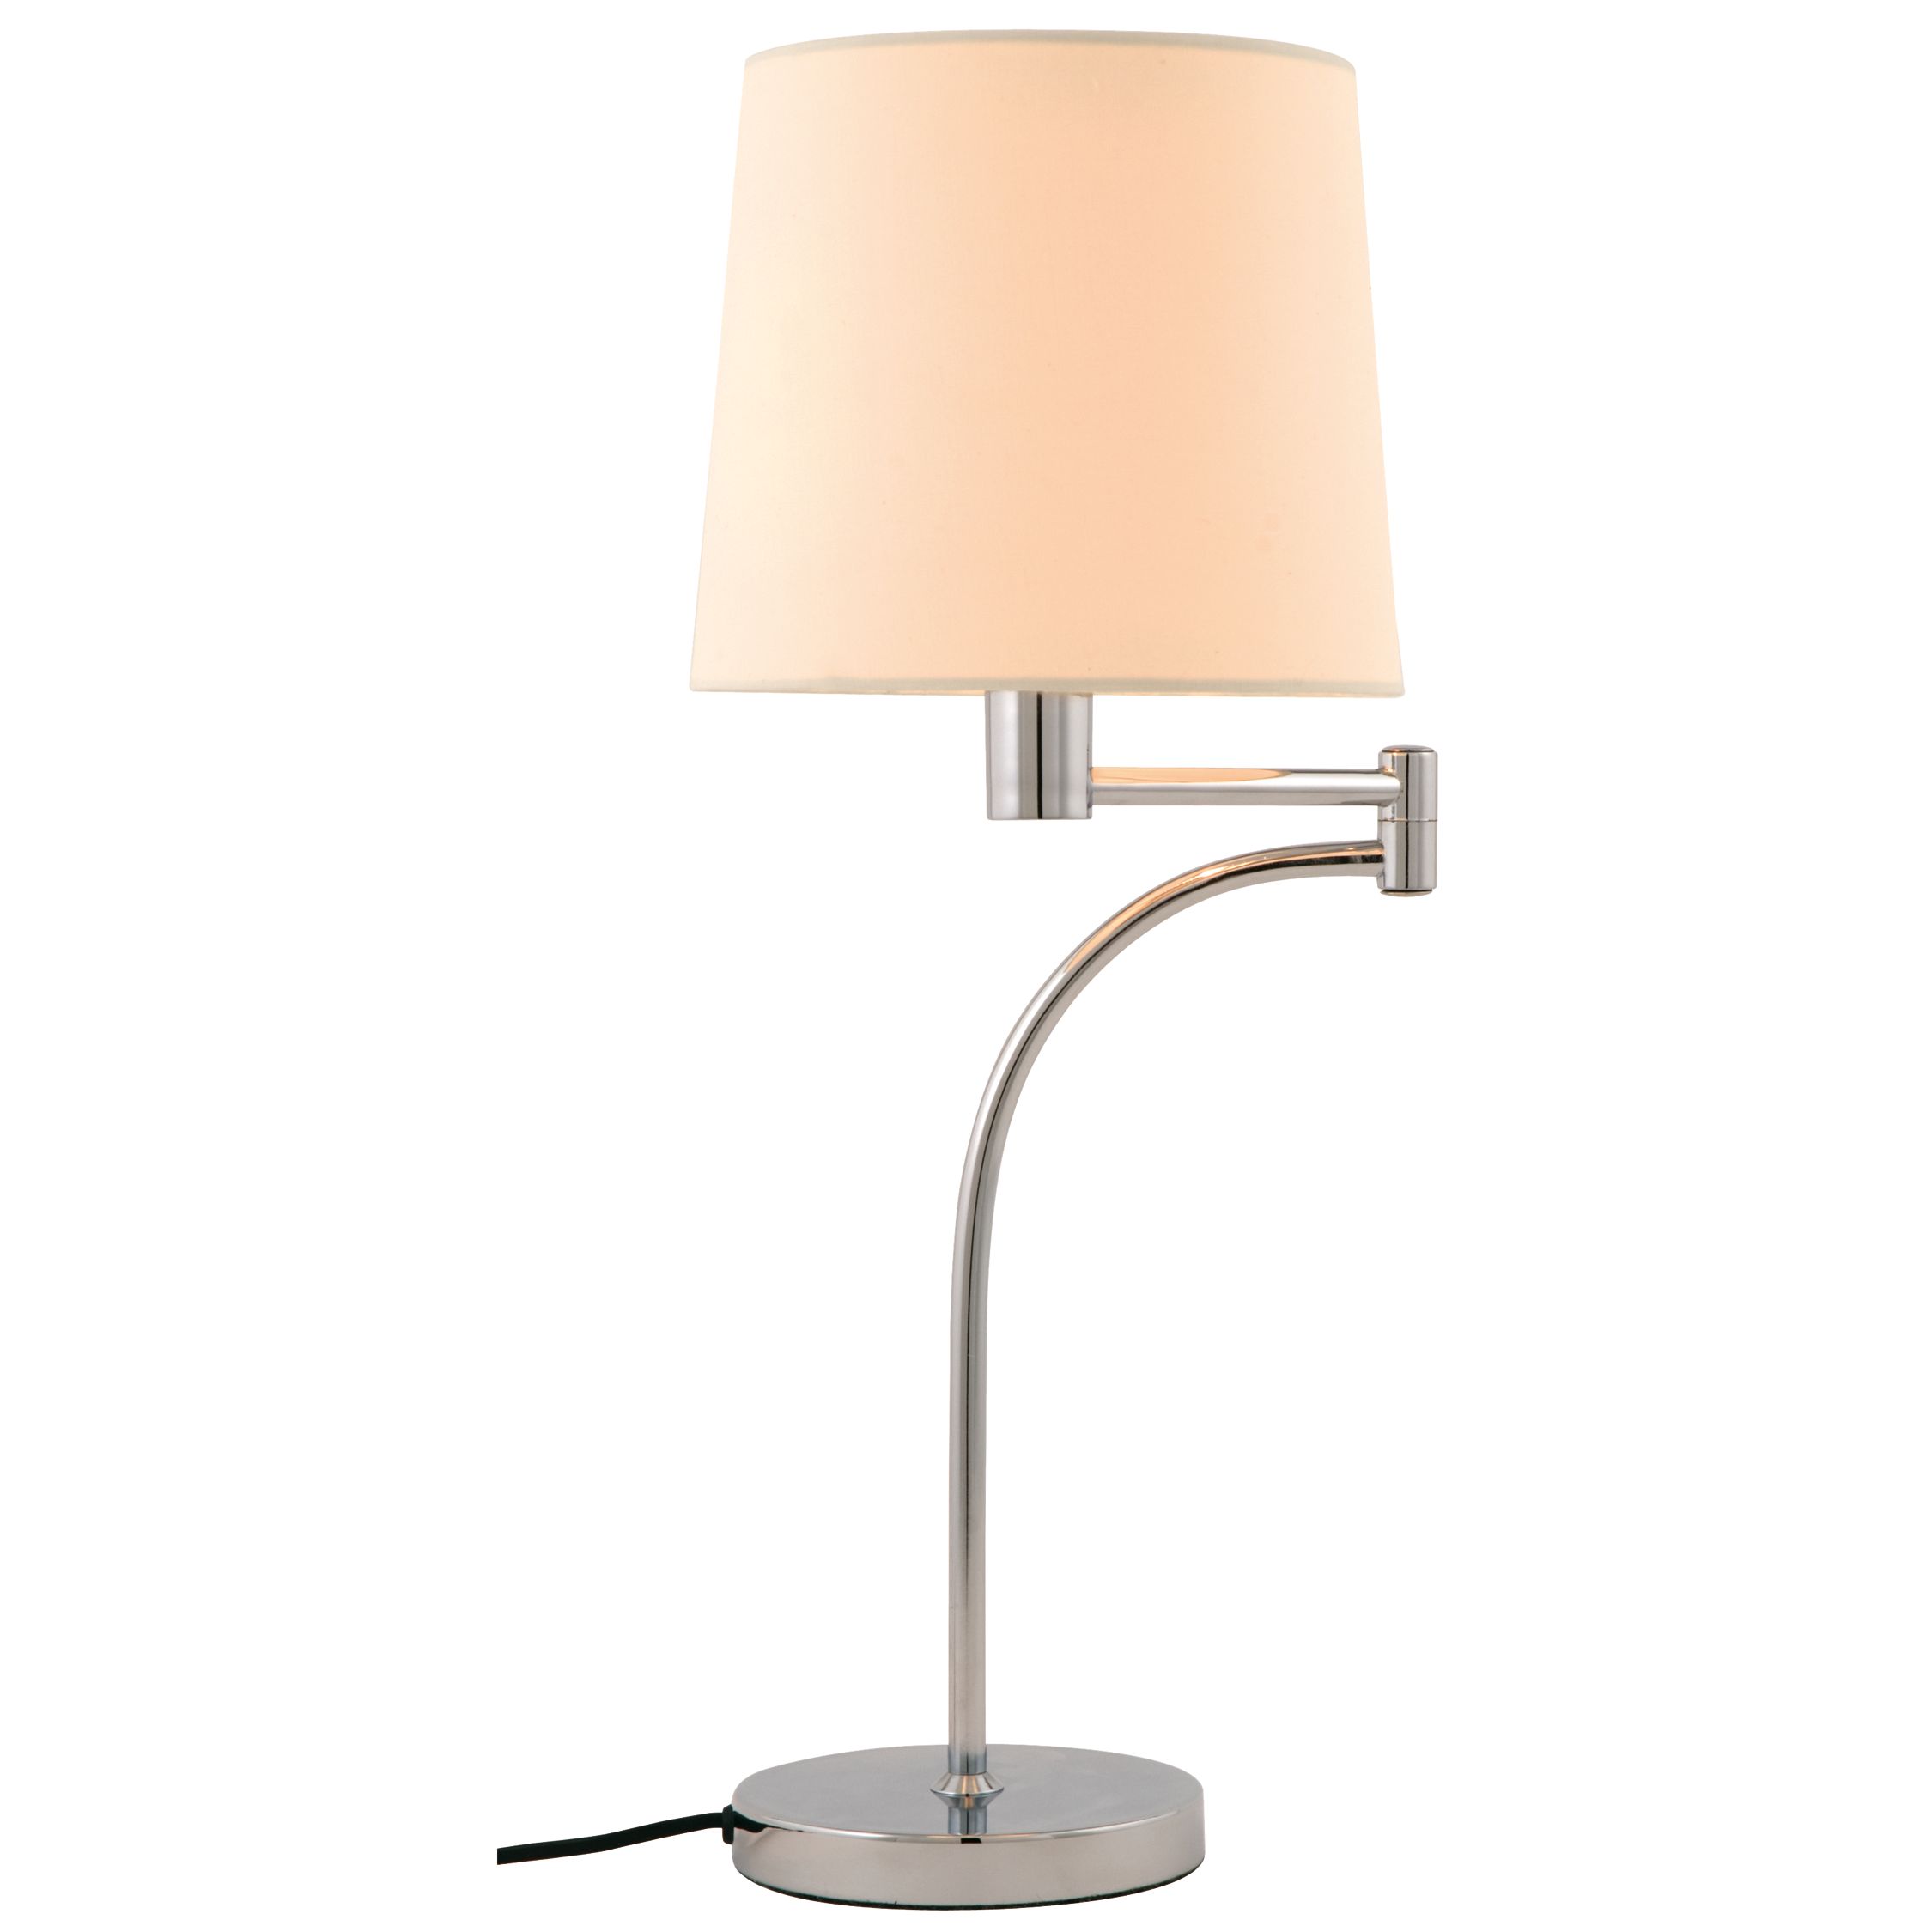 John Lewis Bond Table Lamp